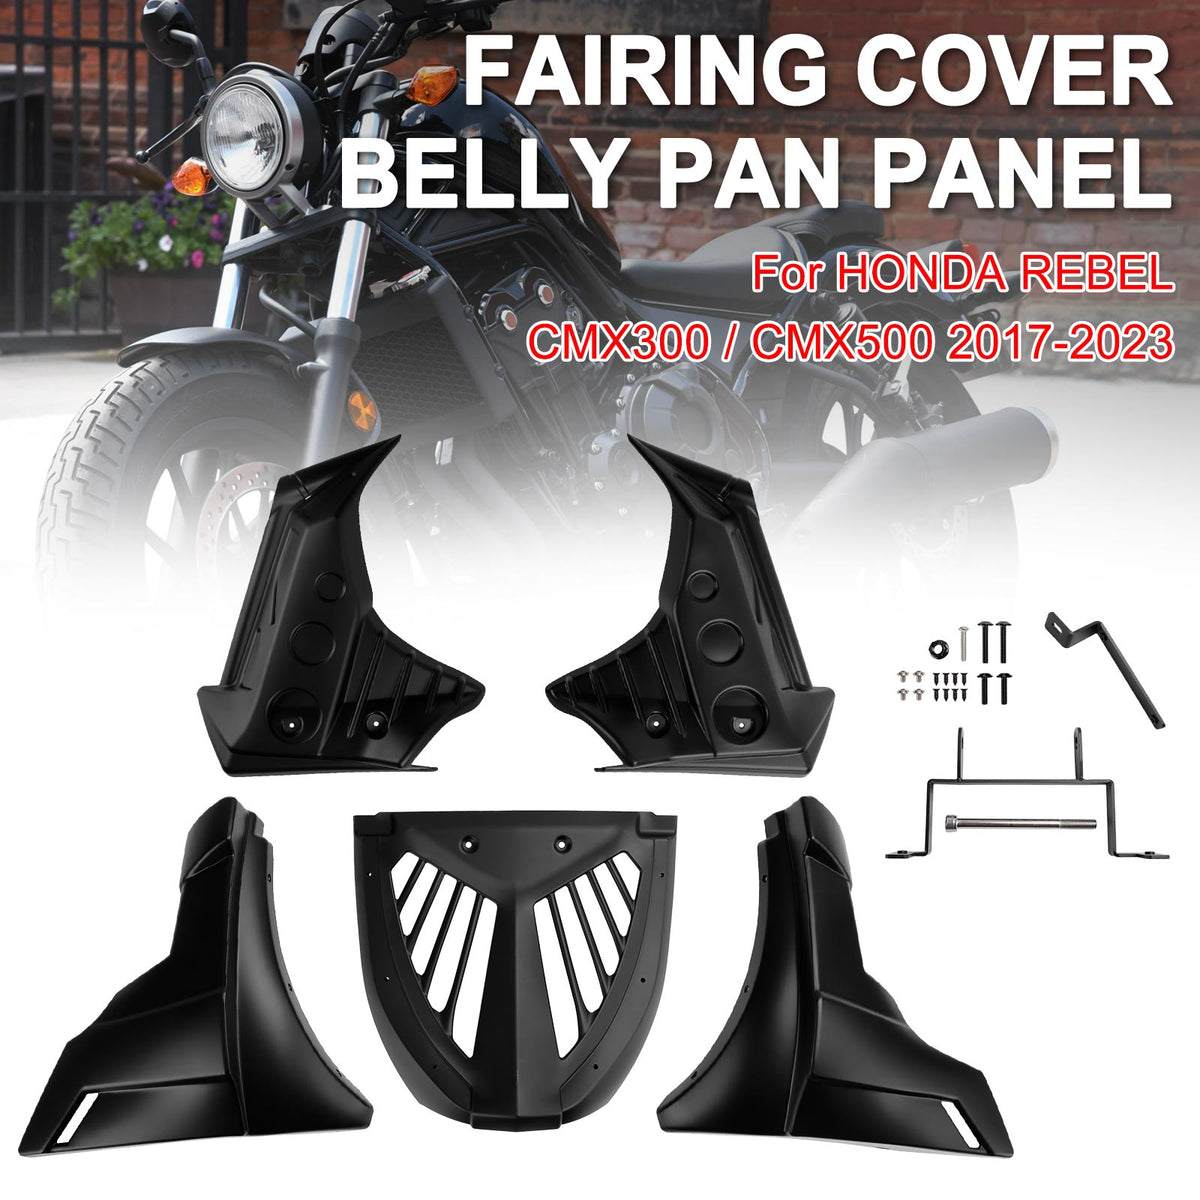 Fairing Cover Belly Pan Panel Engine Guard For Honda Rebel CMX 300 500 17-2023